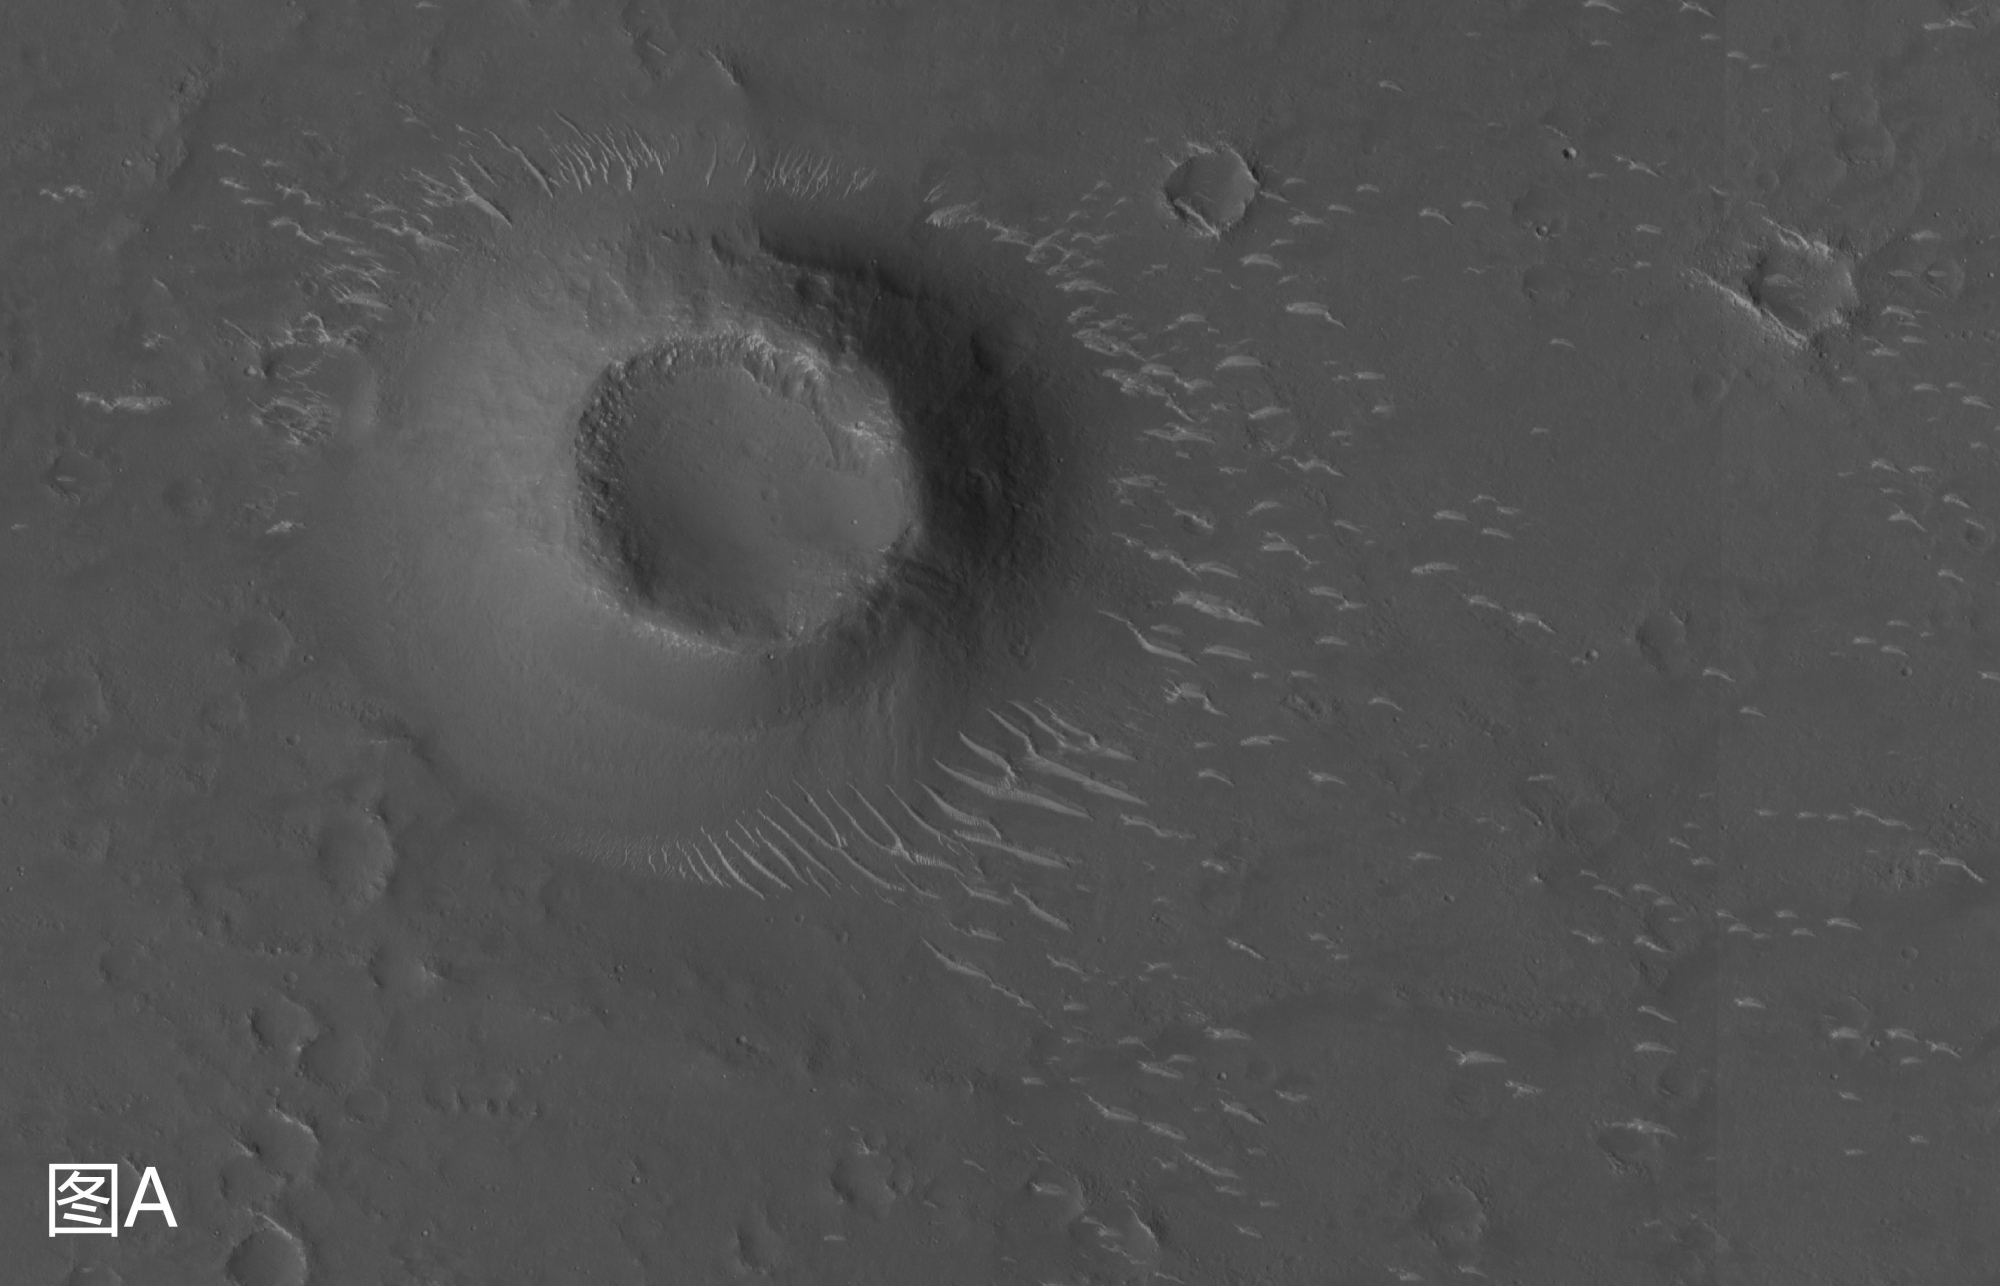 10_Tianwen-1-orbiter_HiRIC_Utopia-Planitia_landing-site_mud-volcano.thumb.jpg.c23b412d9a56e3ac07a16d50f142a120.jpg